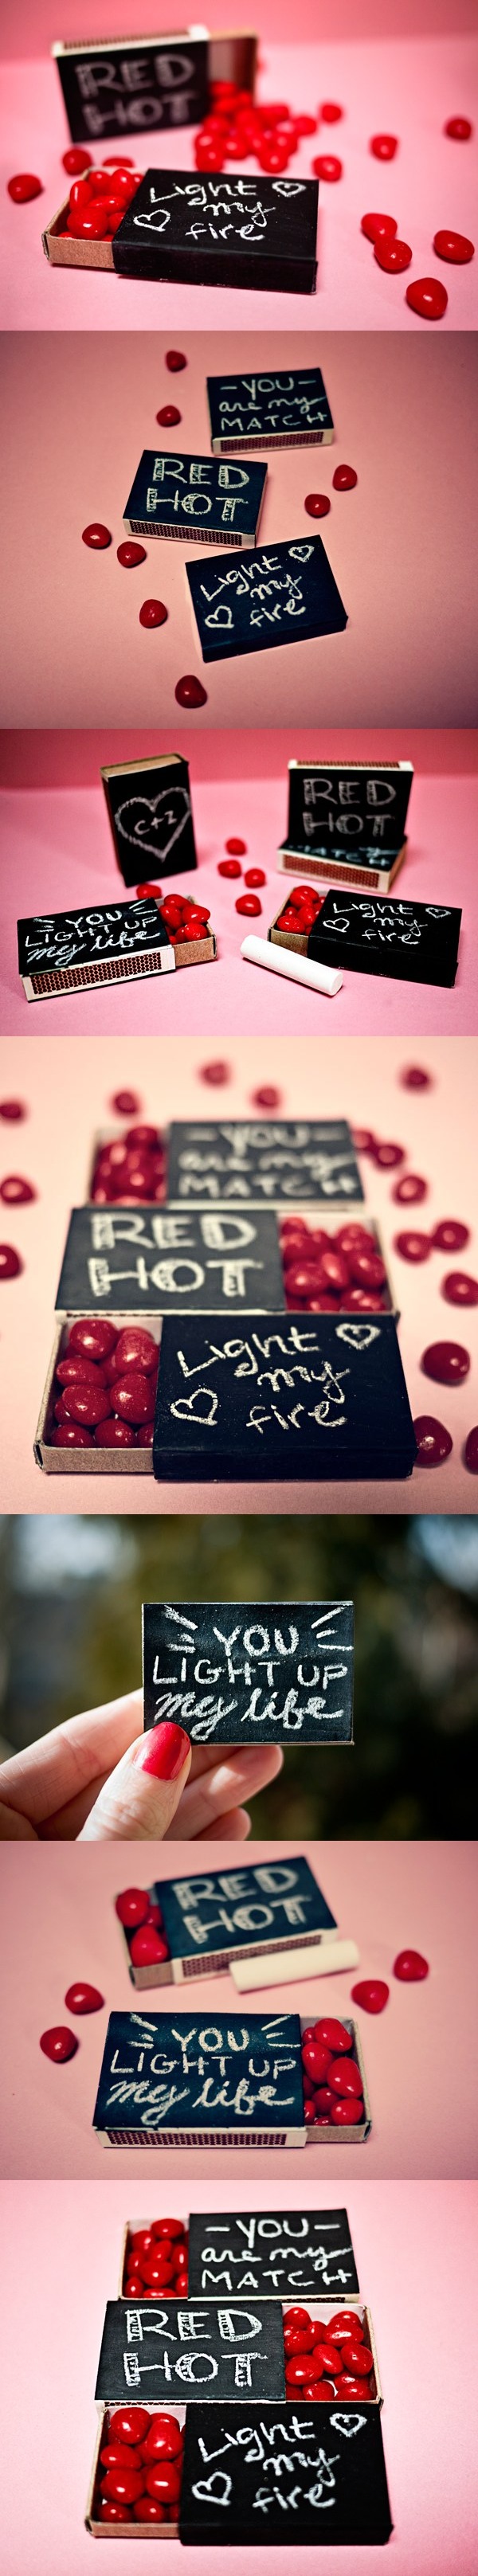 17-a-red-hot-valentine